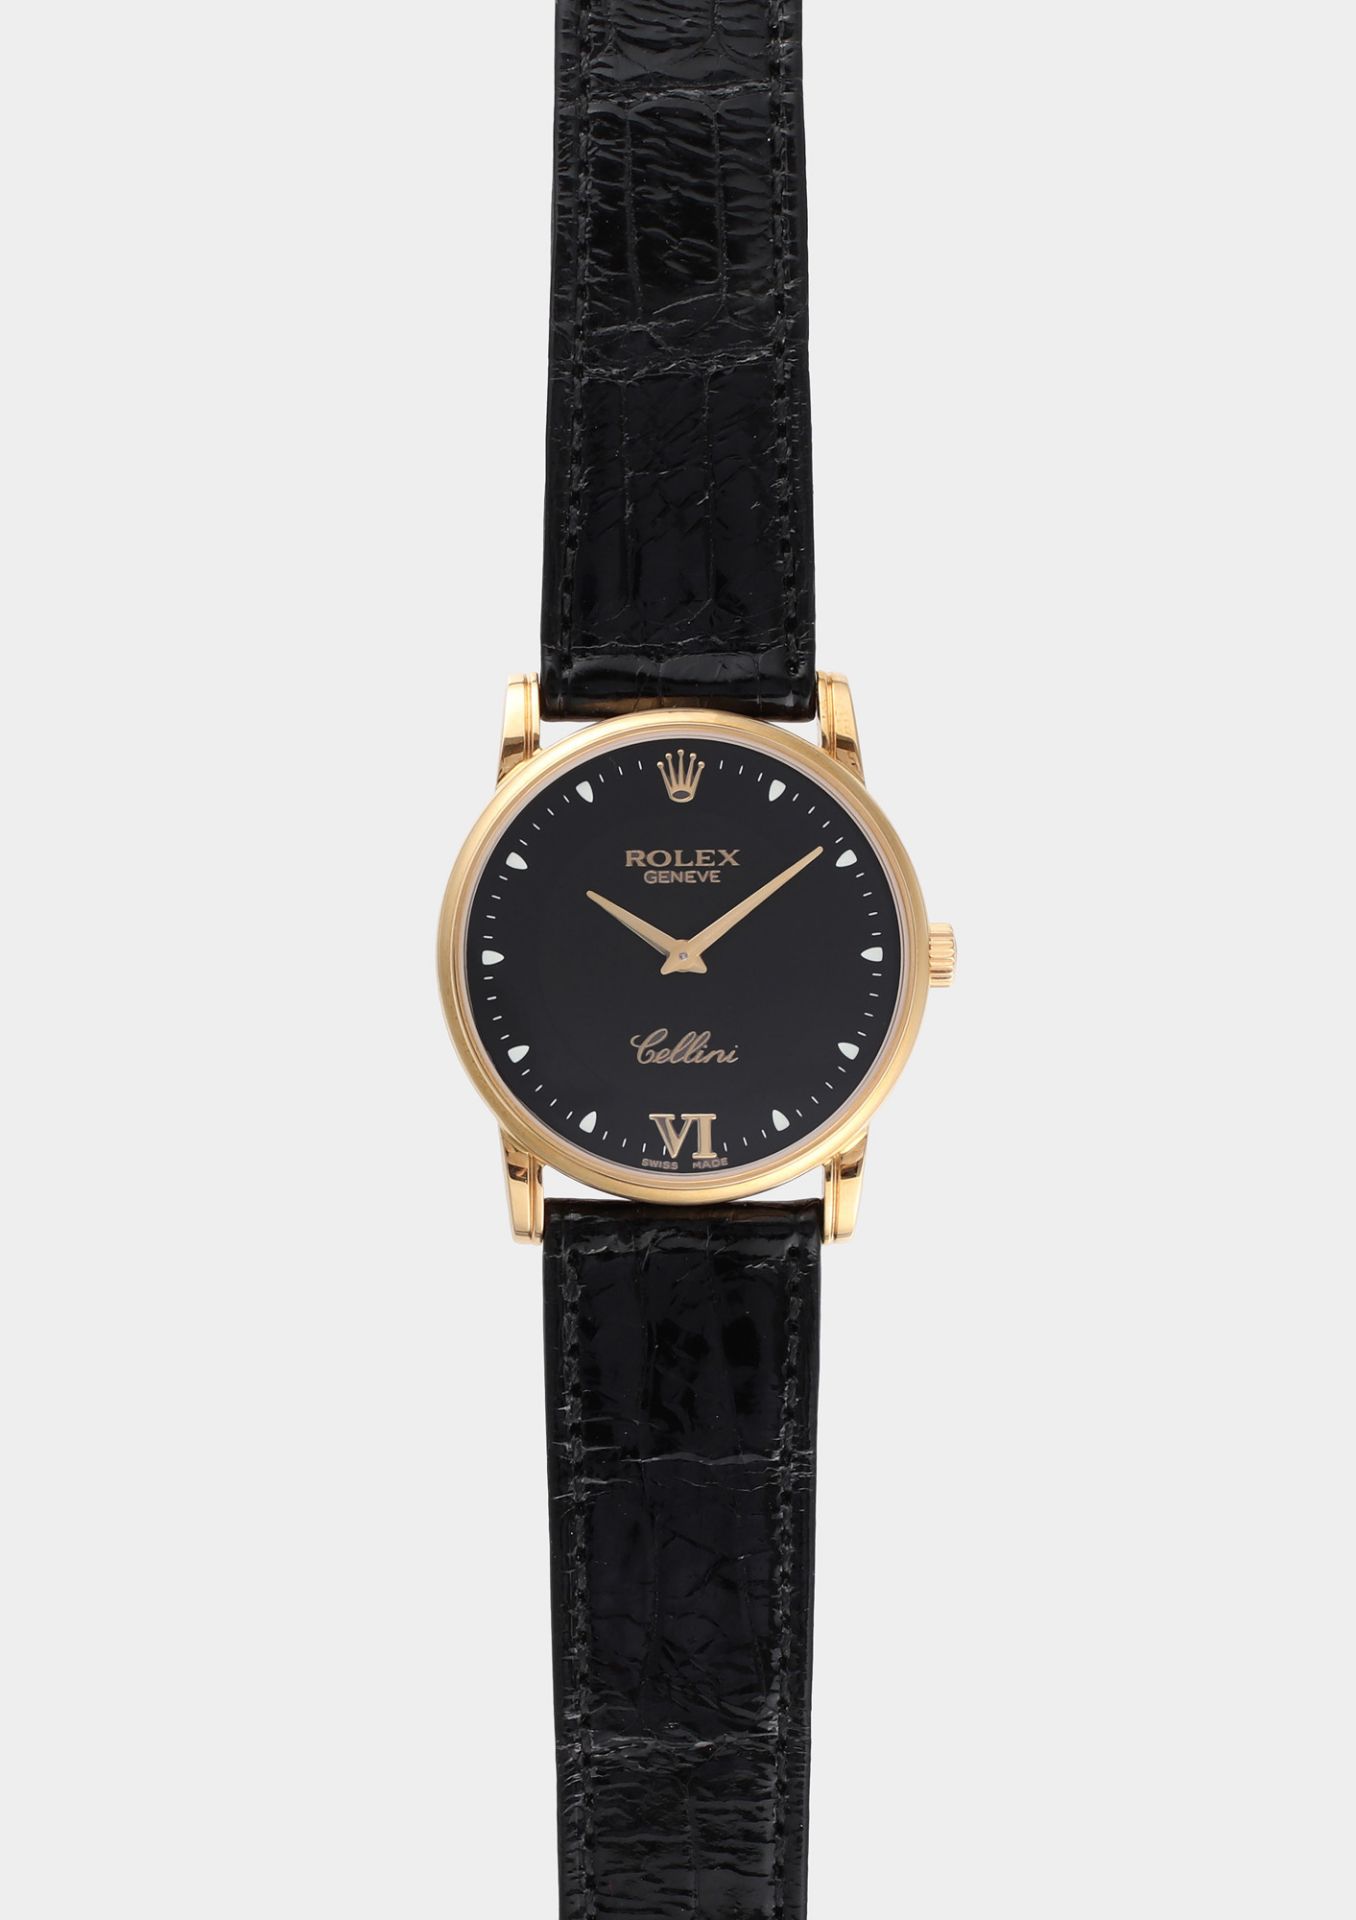 Armbanduhr, Rolex, Cellini, 750 GG